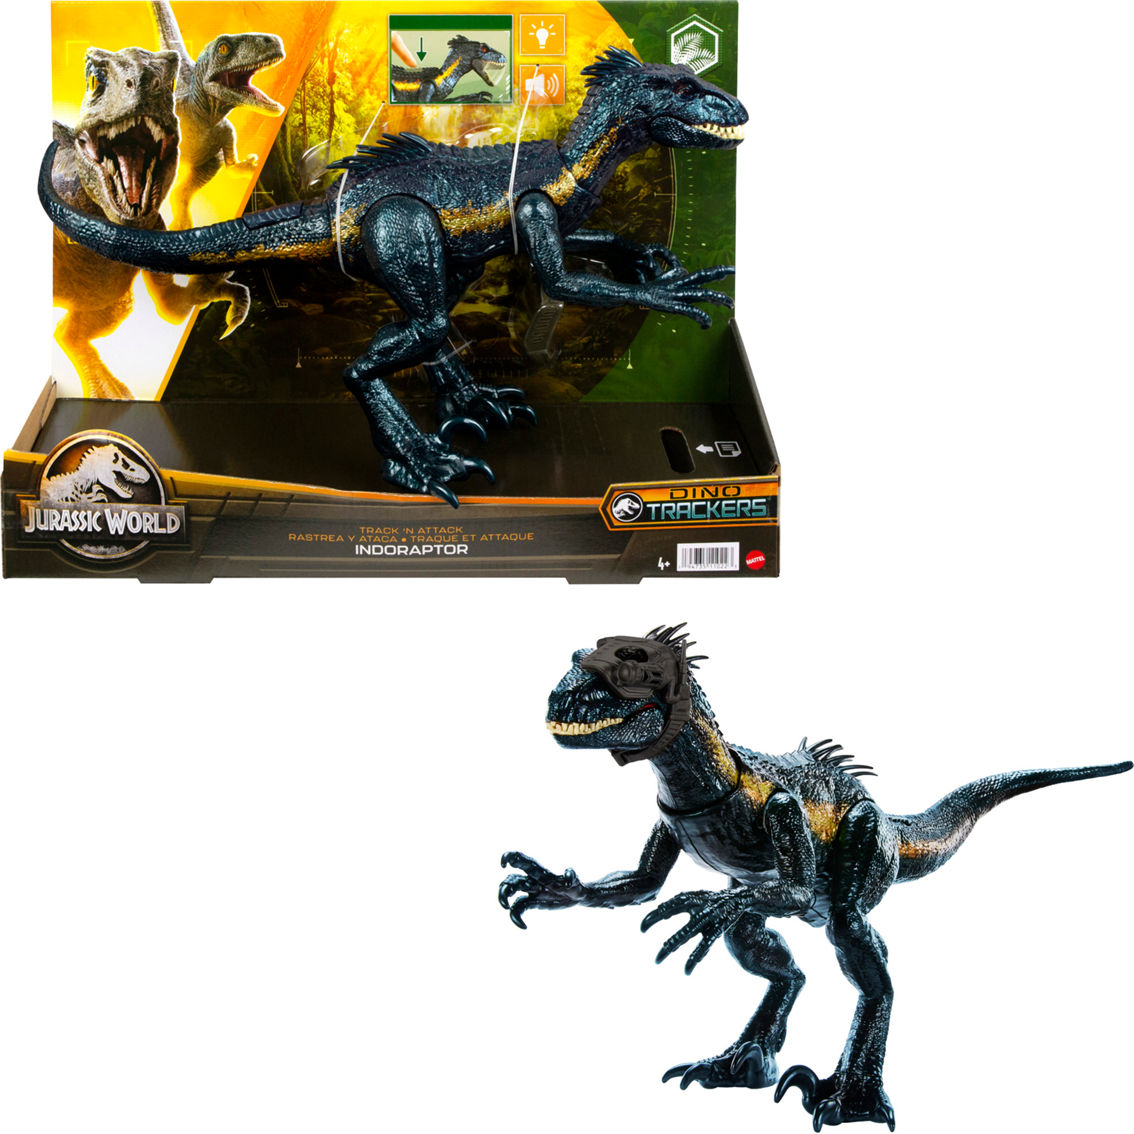 Jurassic World Fierce Changers Chase 'N Roar Tyrannosaurus Rex Toy - Image 2 of 6